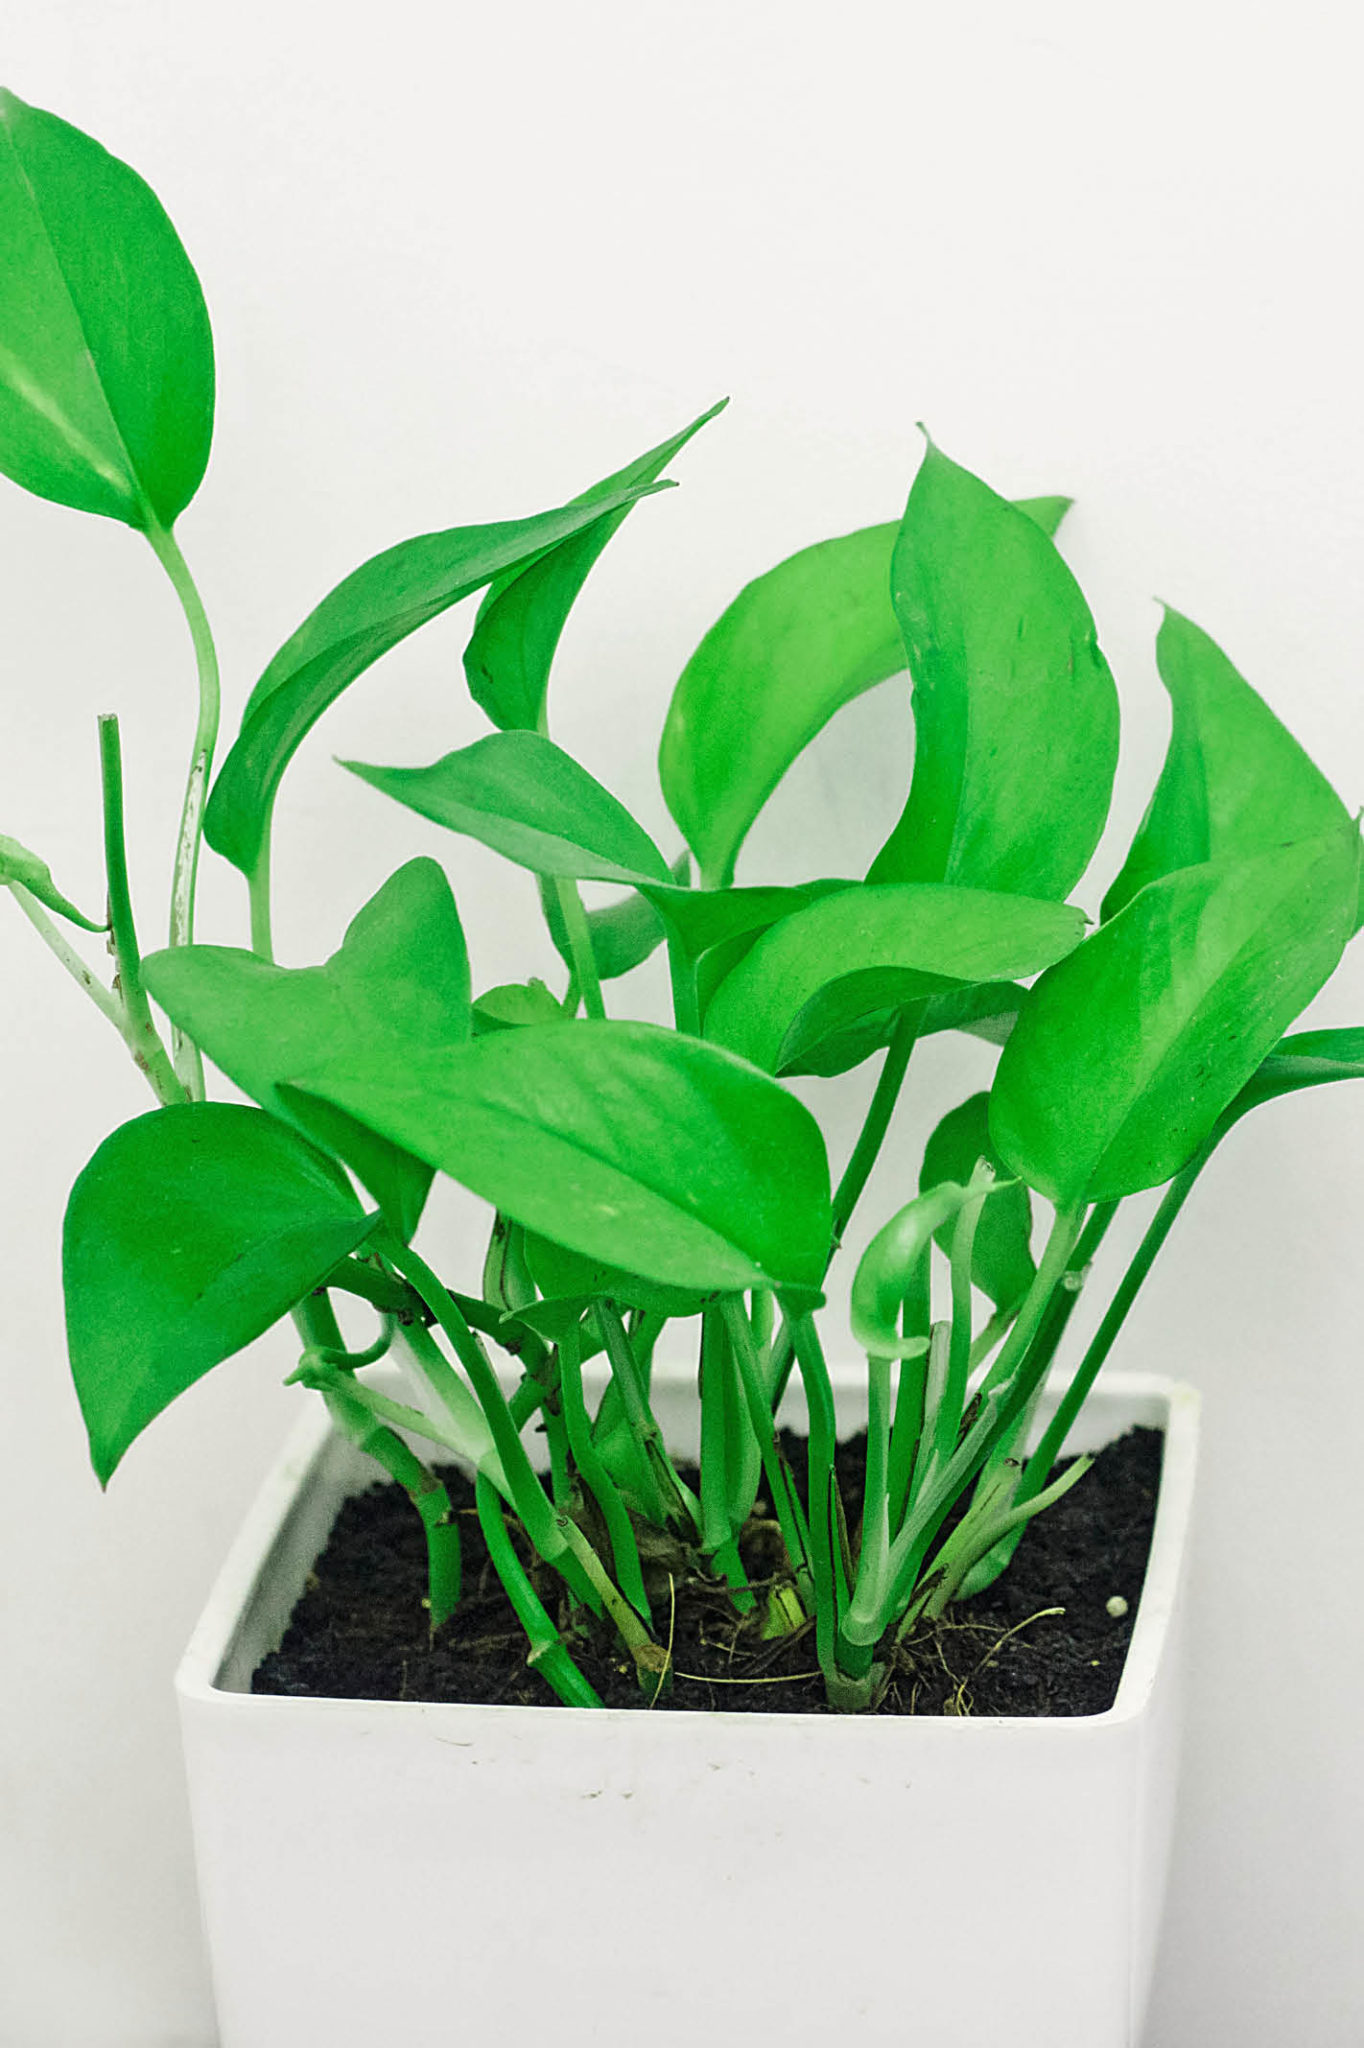 vibrant green plant in white pot